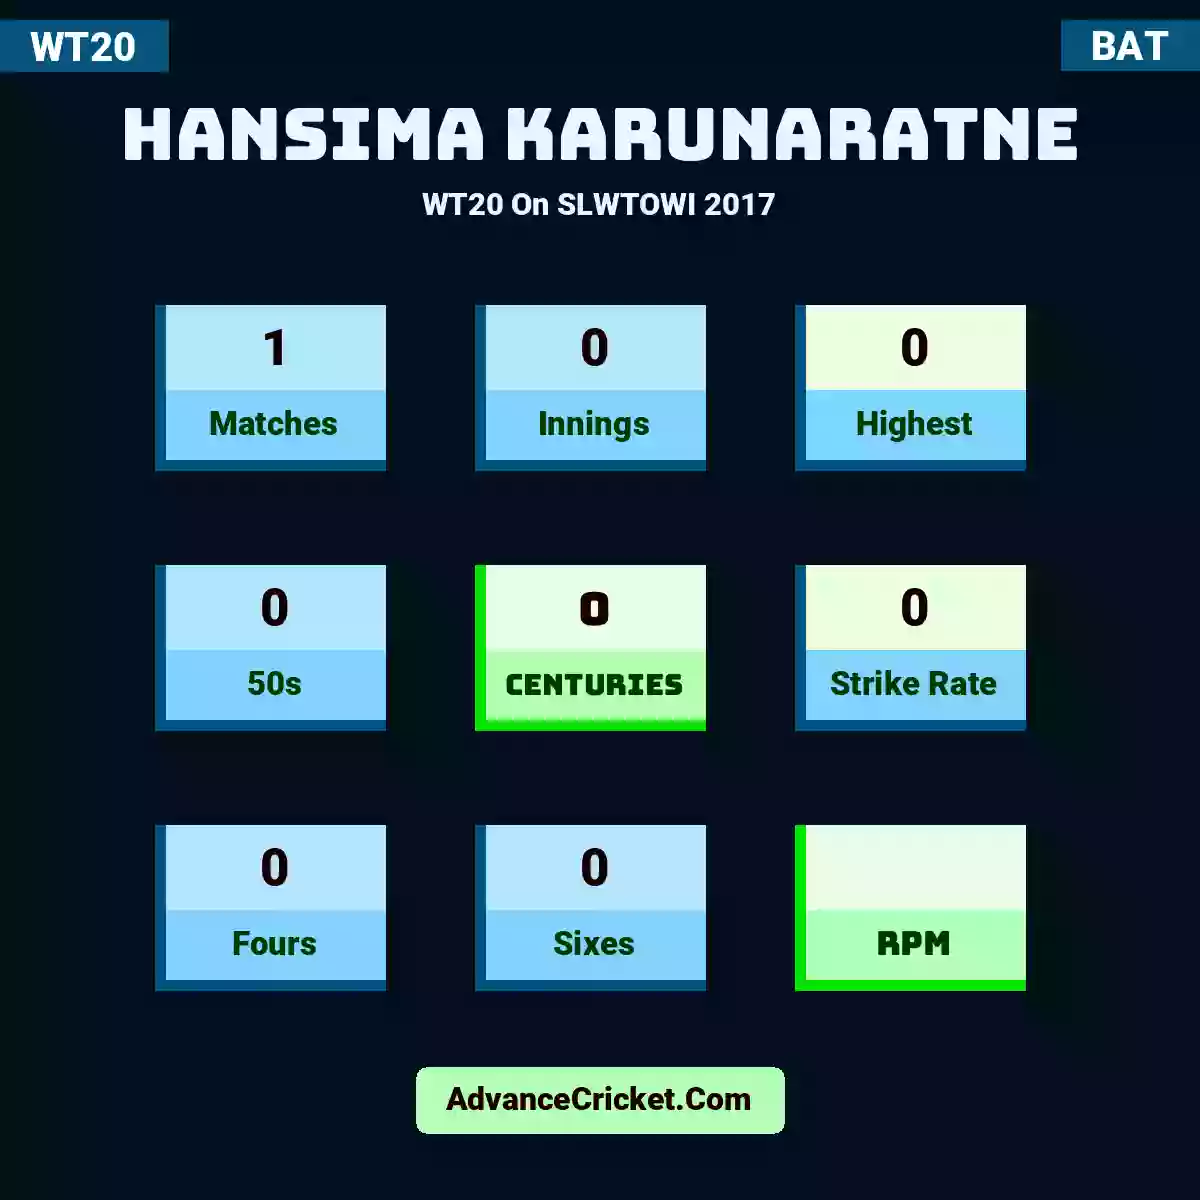 Hansima Karunaratne WT20  On SLWTOWI 2017, Hansima Karunaratne played 1 matches, scored 0 runs as highest, 0 half-centuries, and 0 centuries, with a strike rate of 0. H.Karunaratne hit 0 fours and 0 sixes.